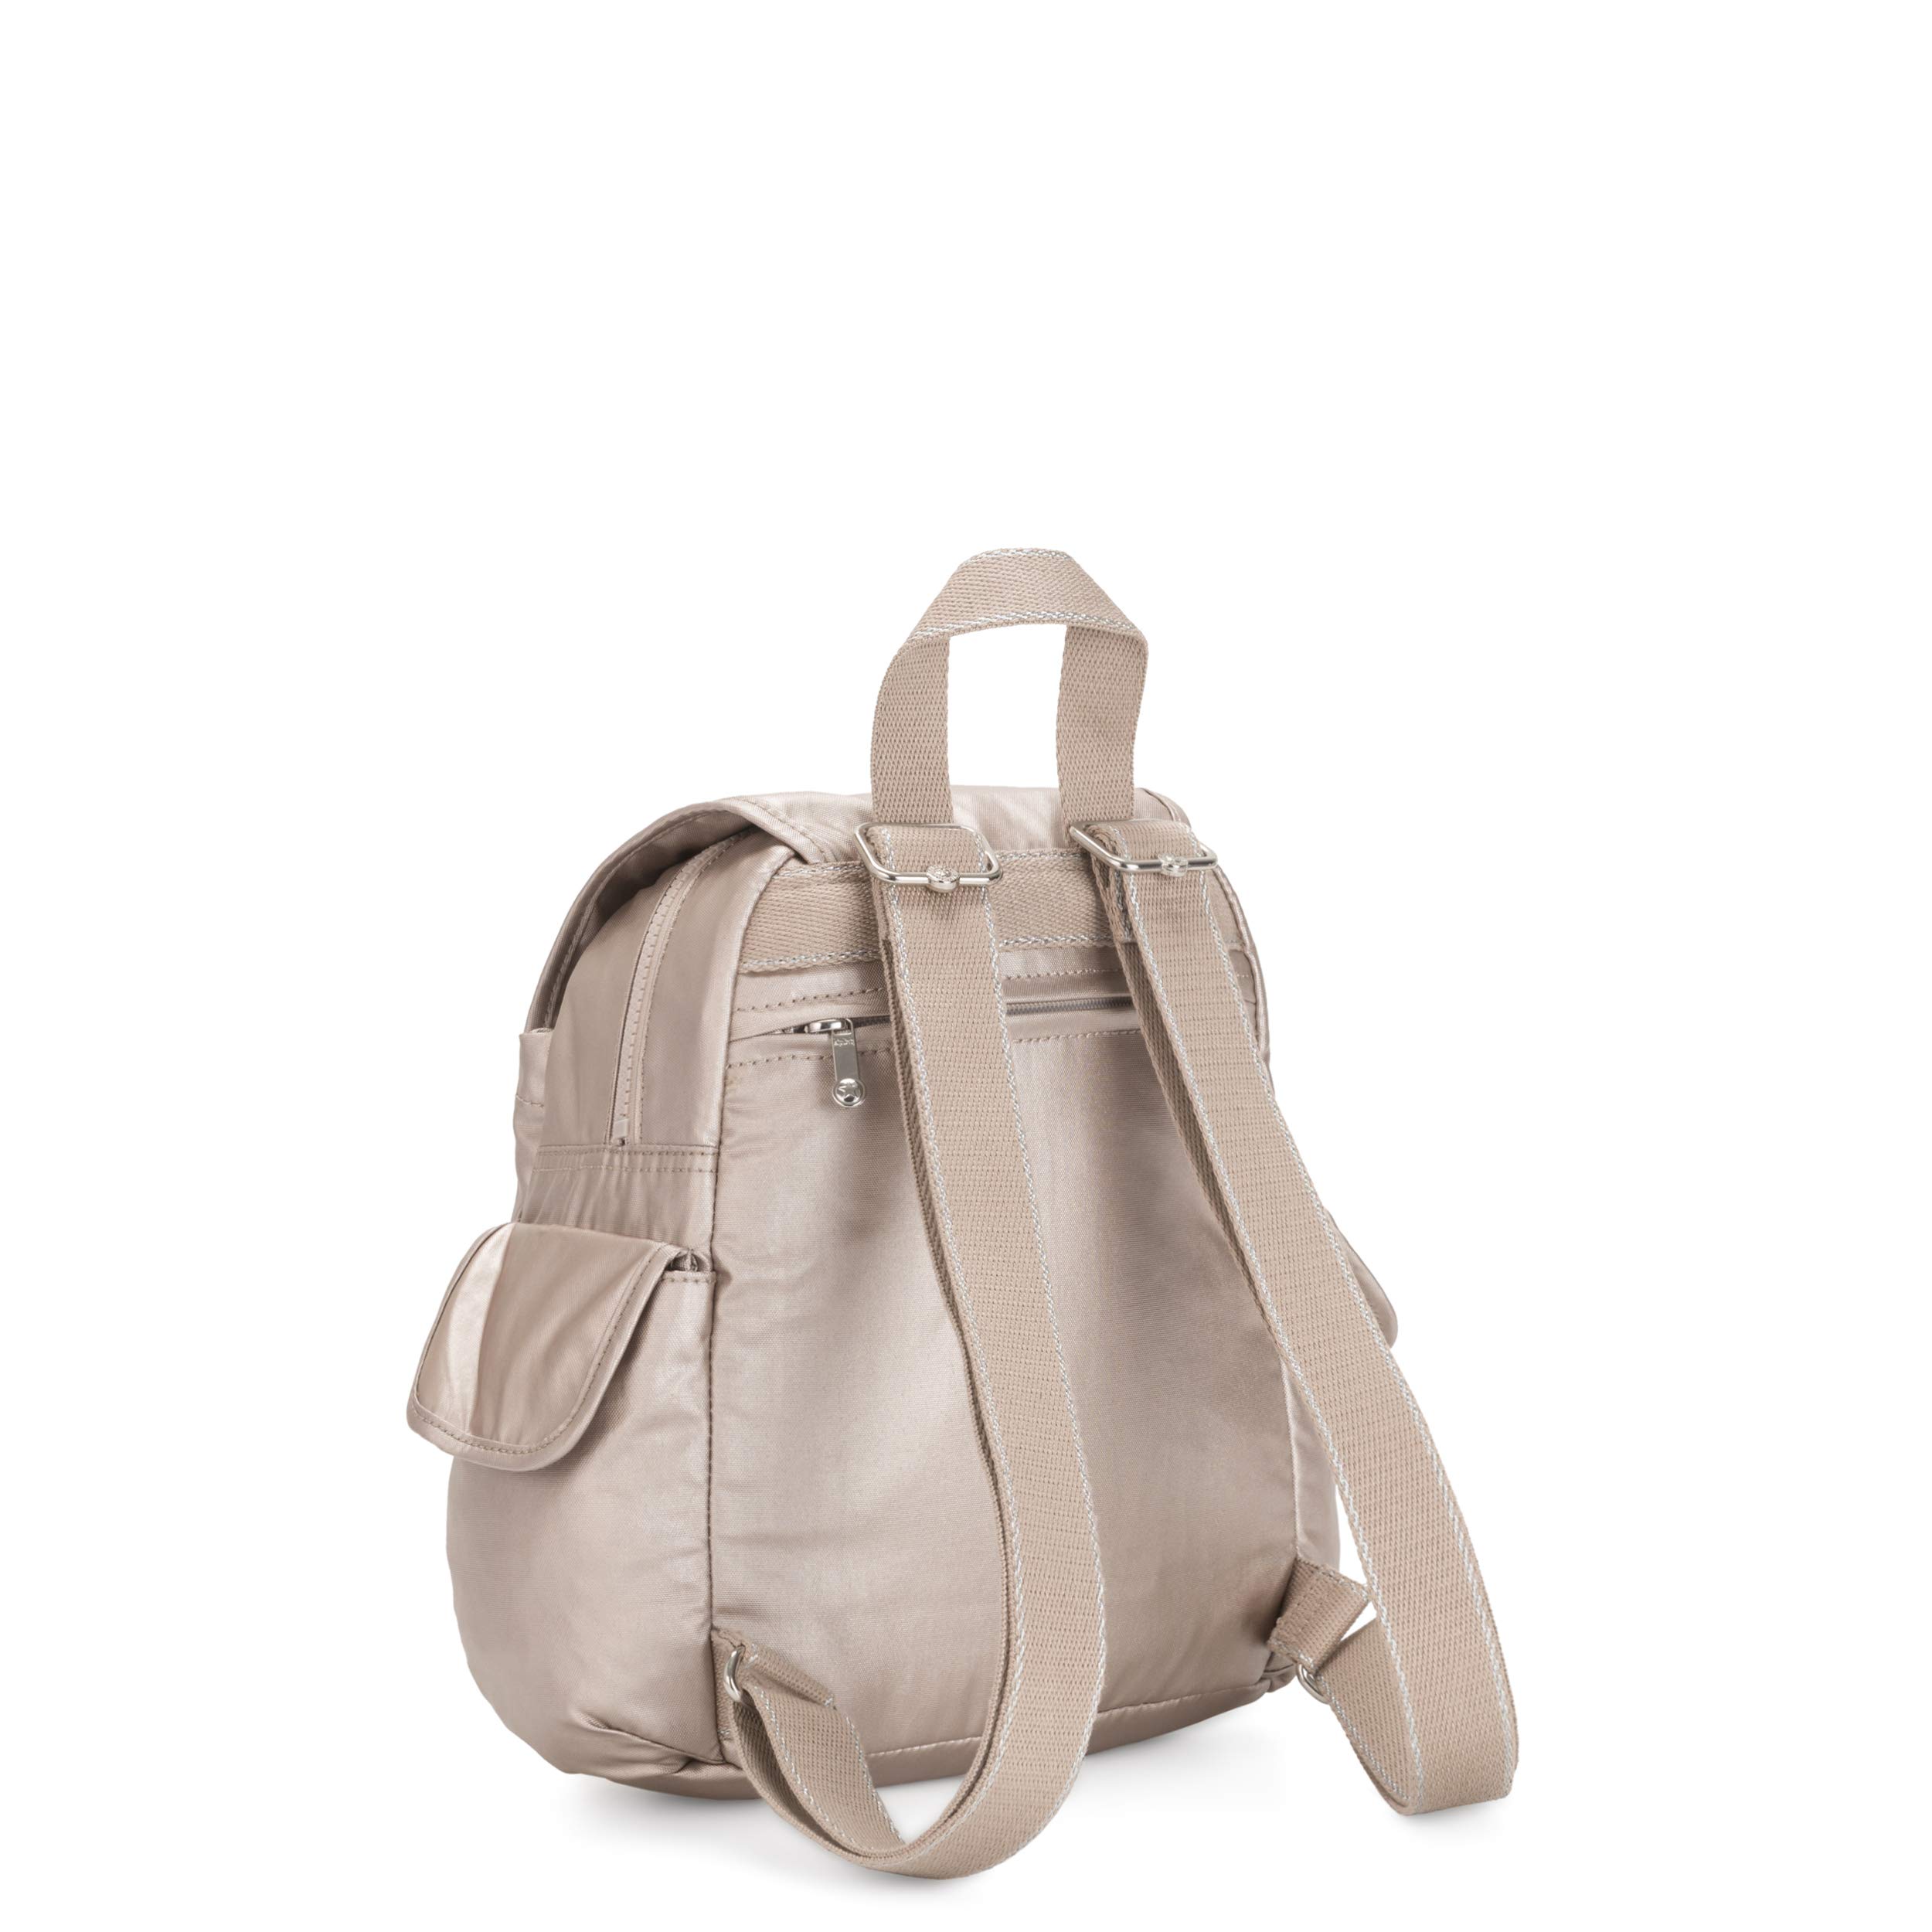 Kipling Women's City Pack Mini Backpack, Lightweight Versatile Daypack, Bag, Metallic Glow